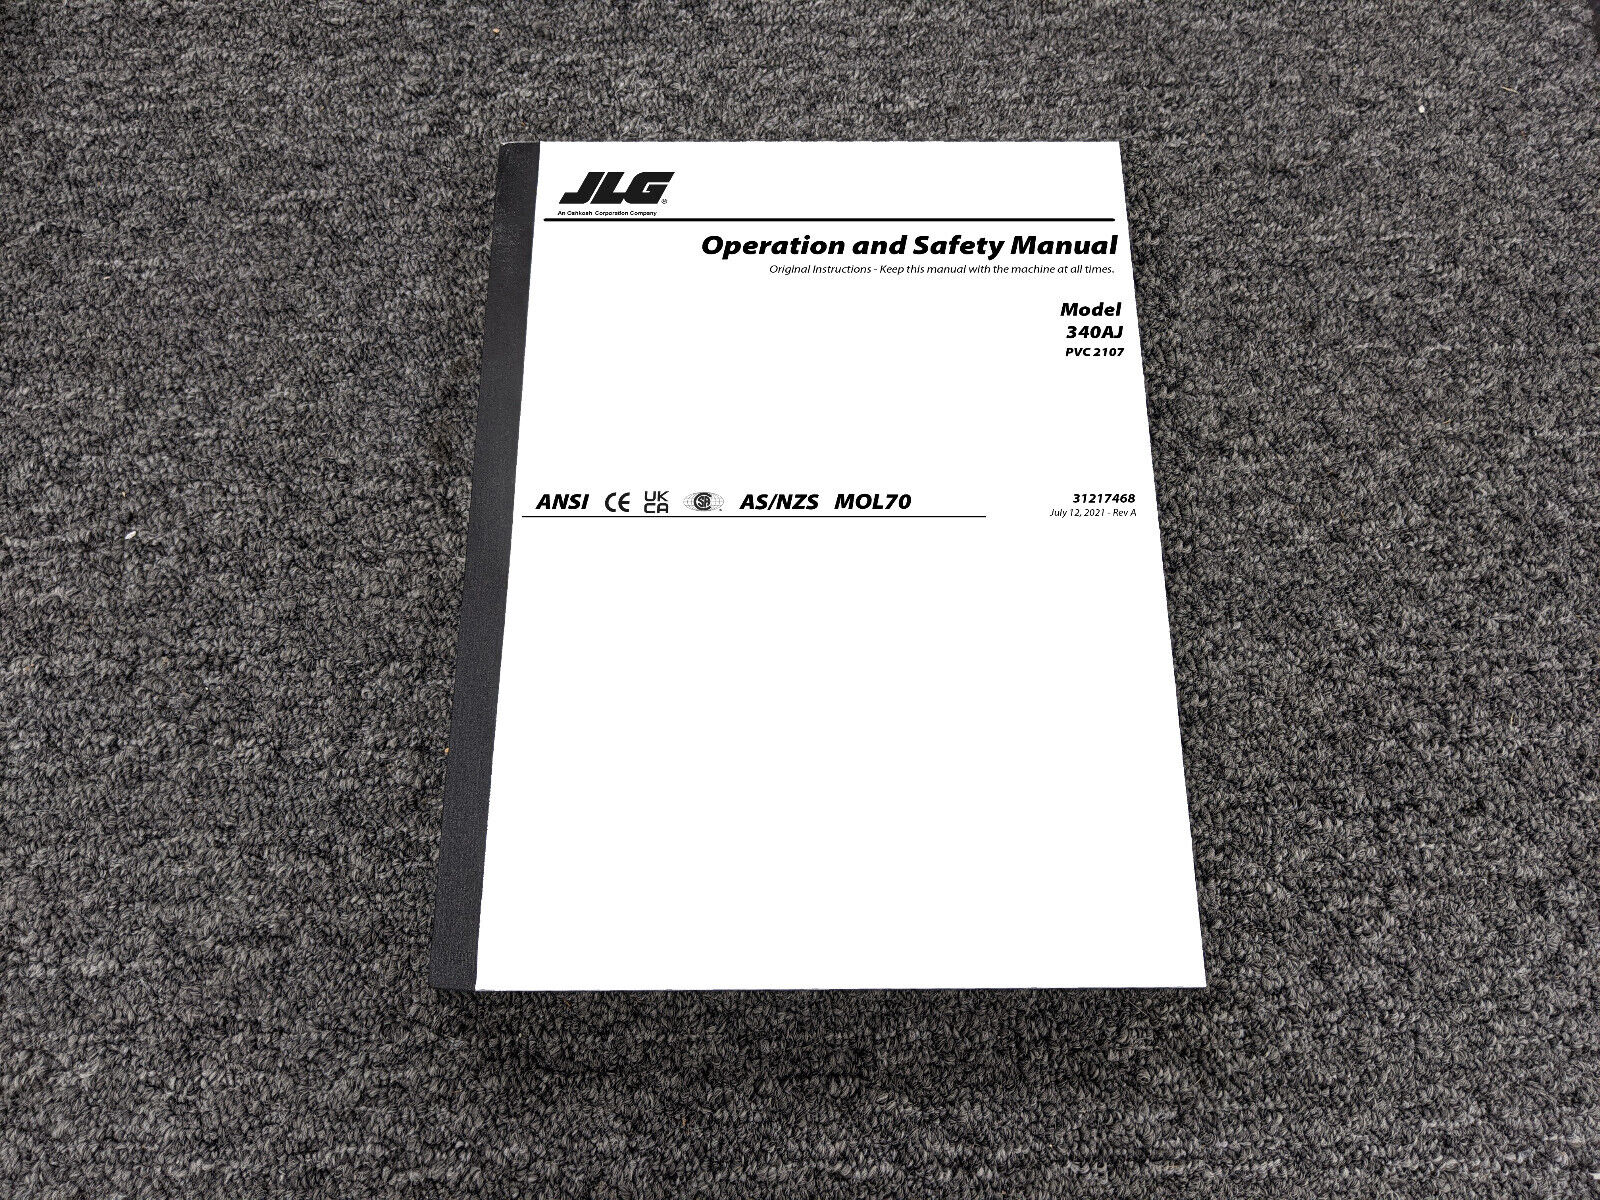 JLG 340AJ Boom Lift PVC 2107 Safety Owner Operator Manual User Guide 31217468